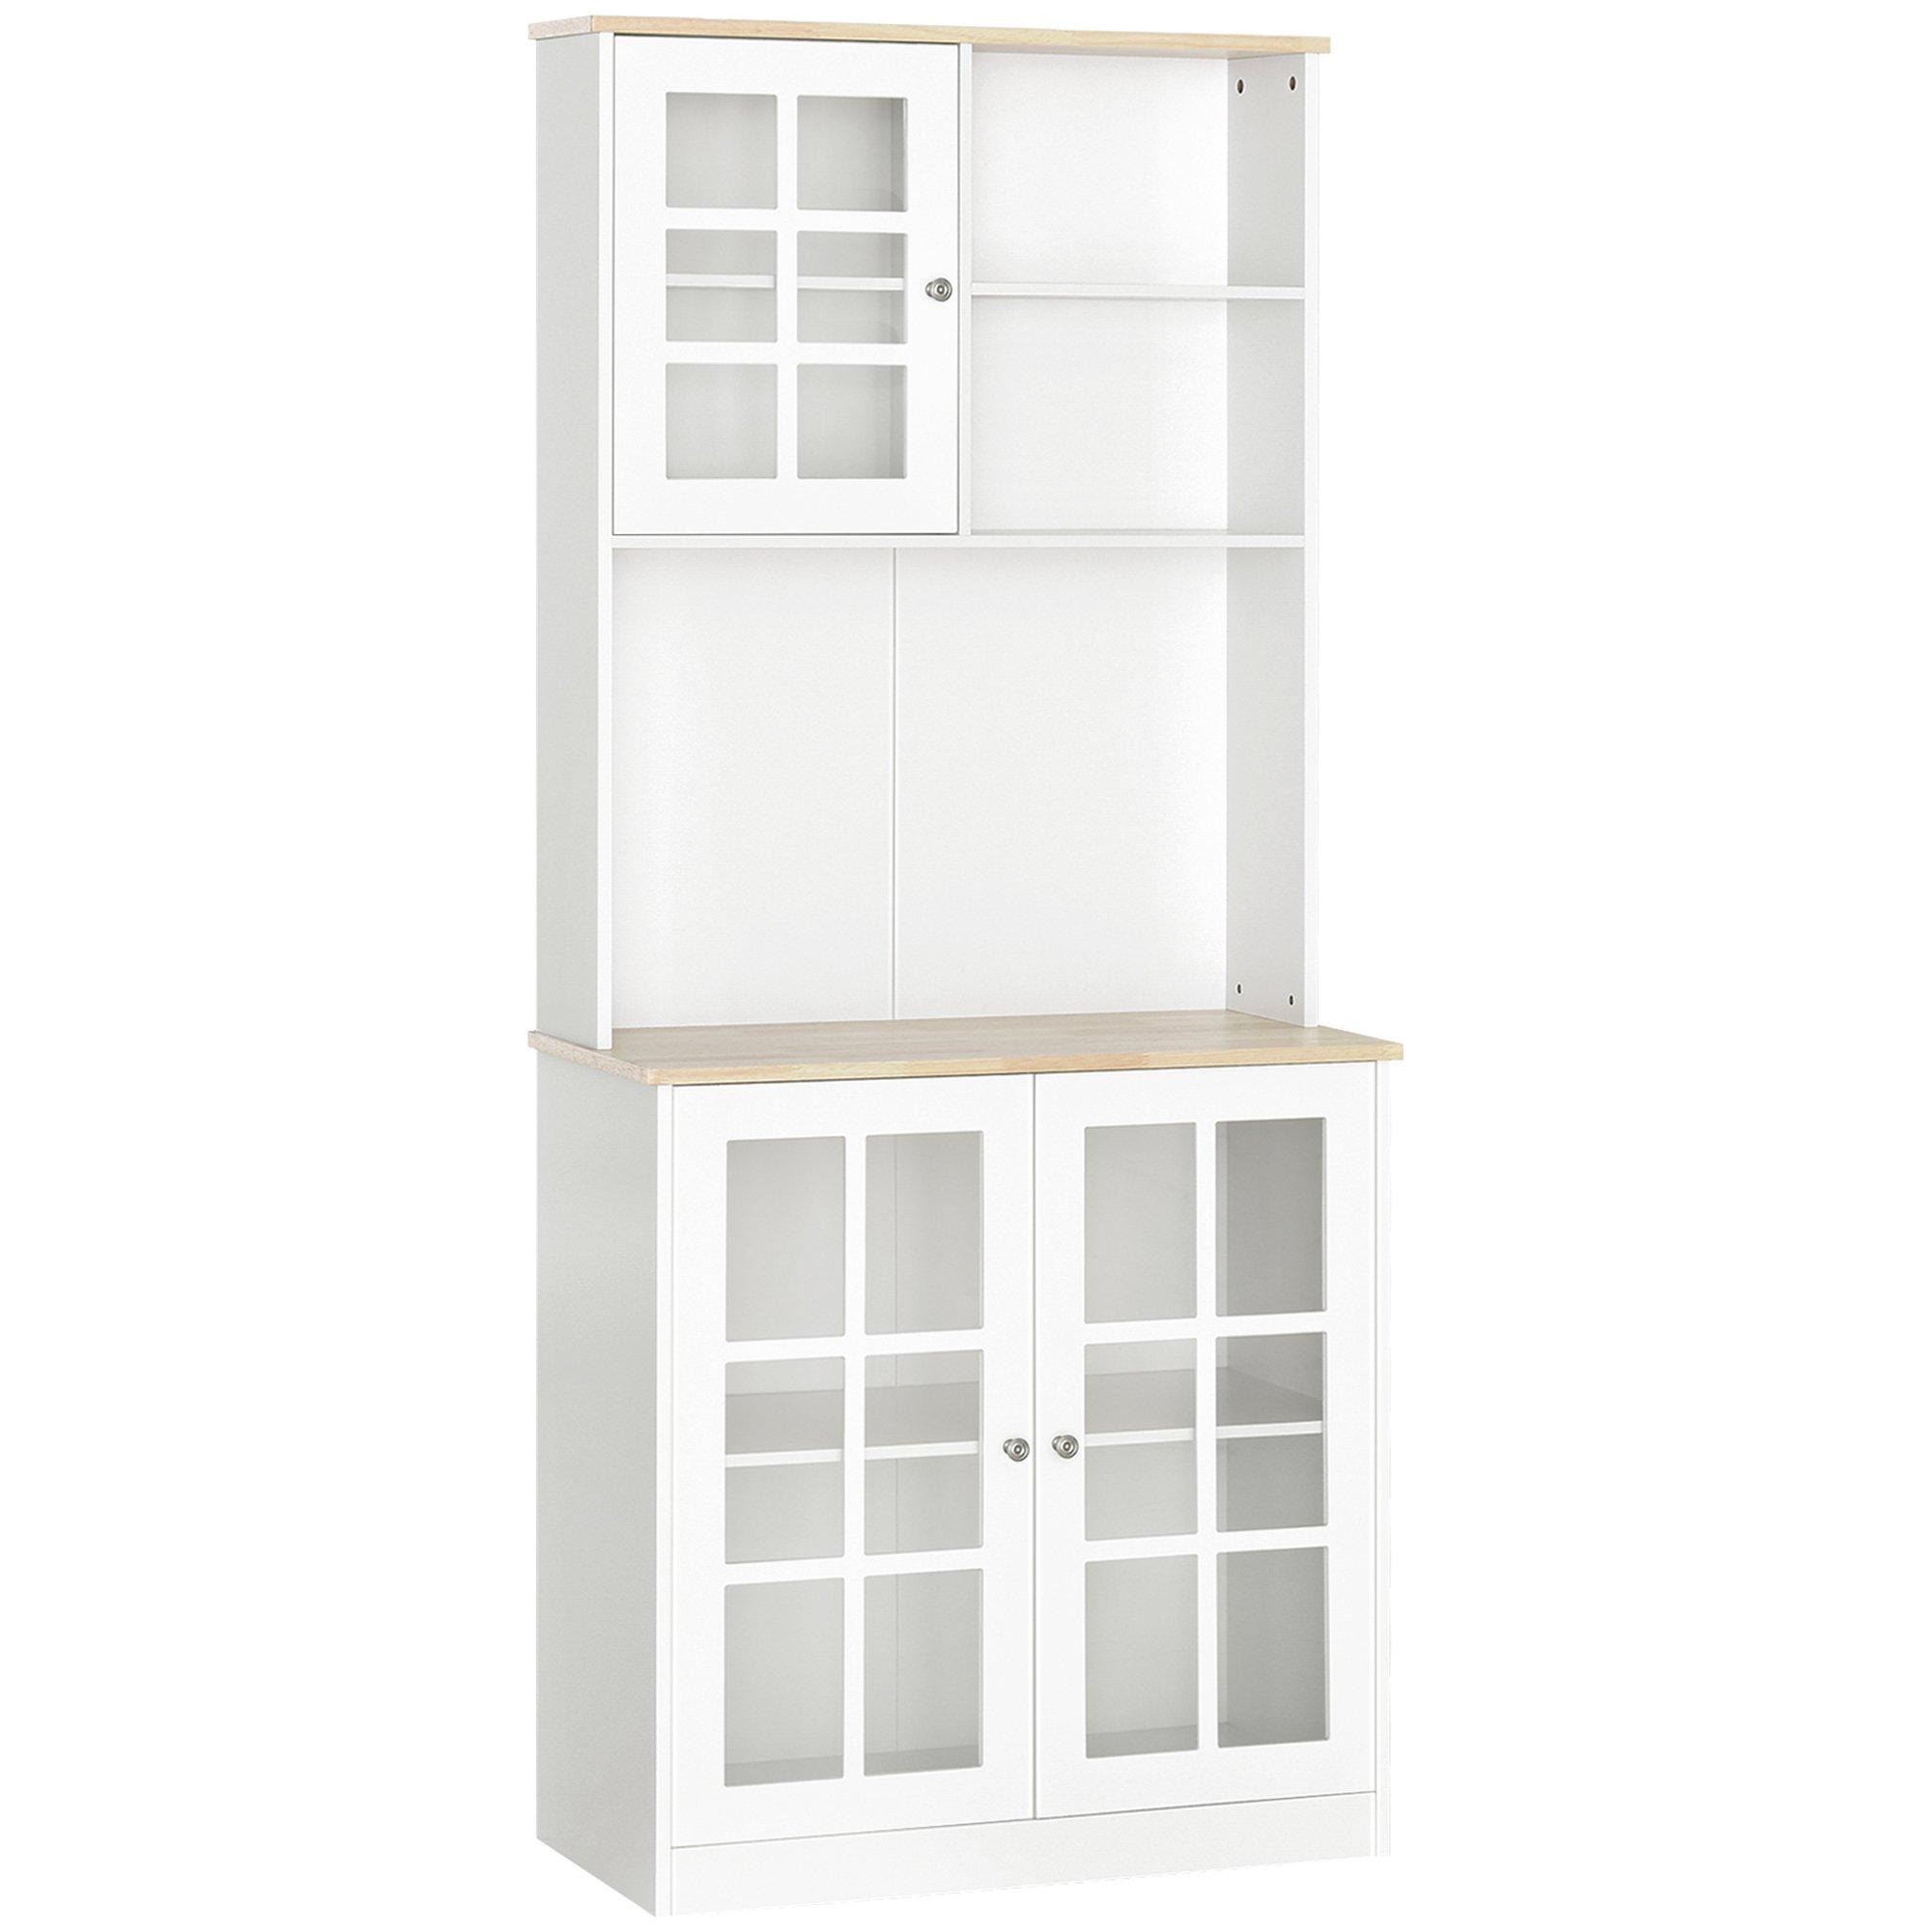 Home Sideboard Storage Cabinet Countertop Grid Glass Doors Shelves